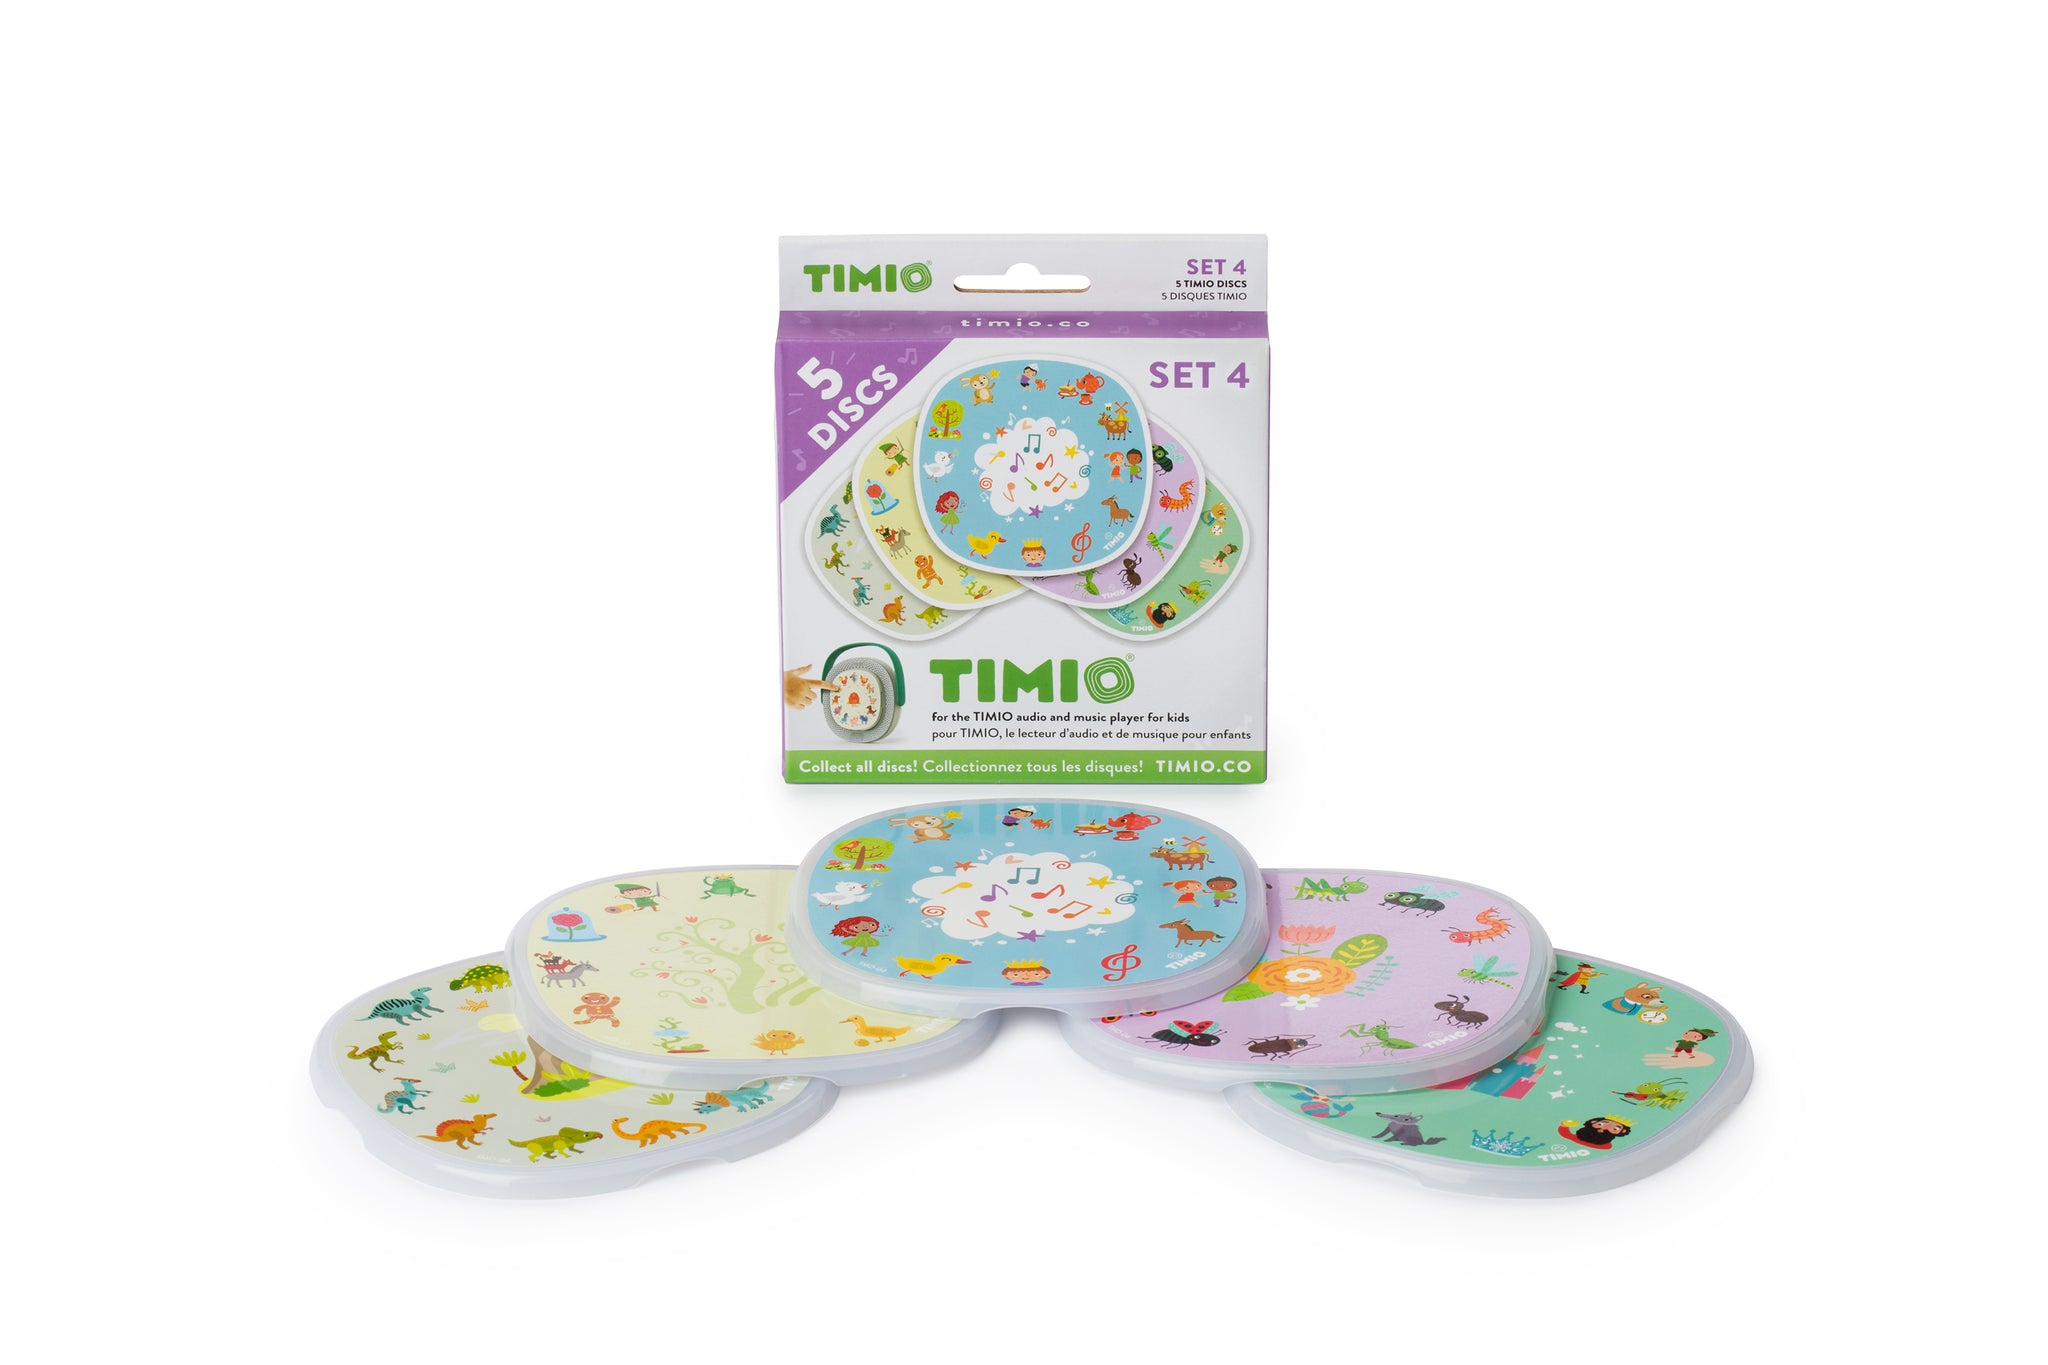 Disc Packs – TIMIO US